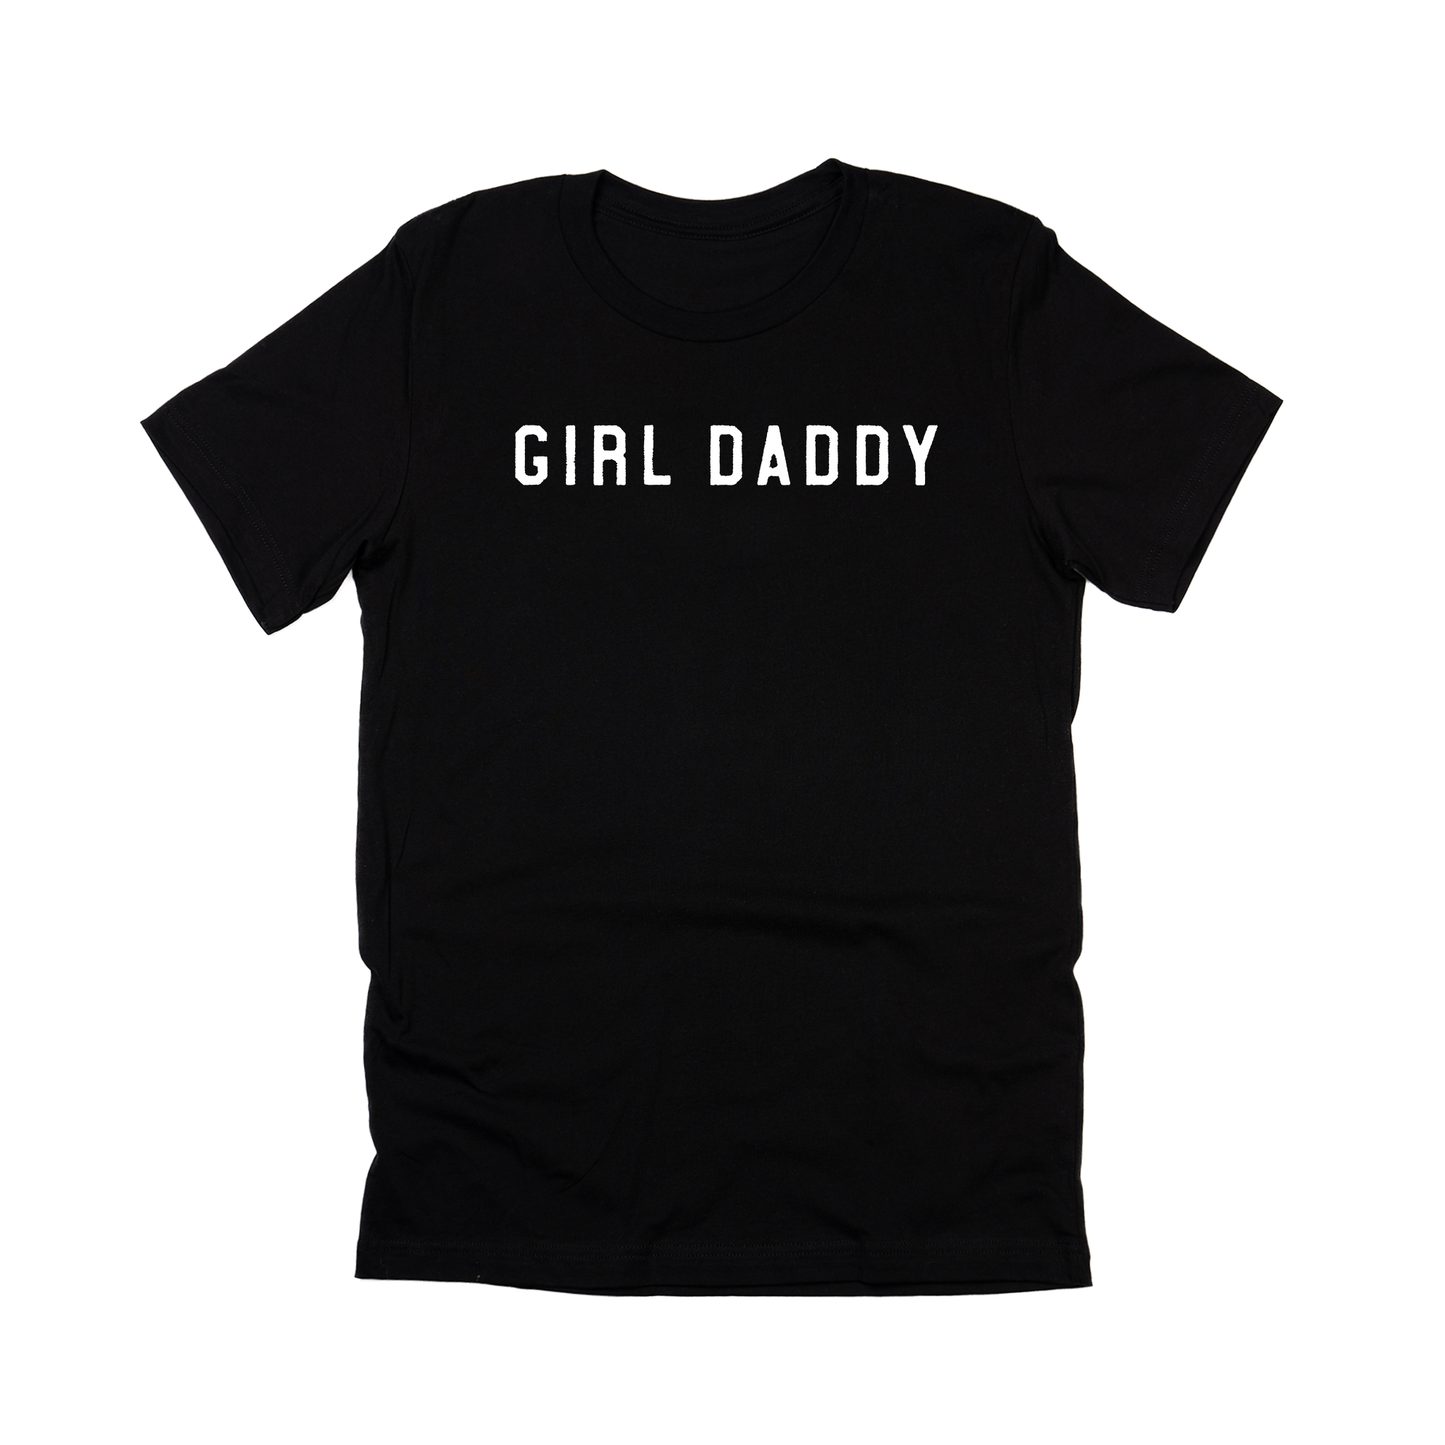 Girl Daddy (White) - Tee (Black)